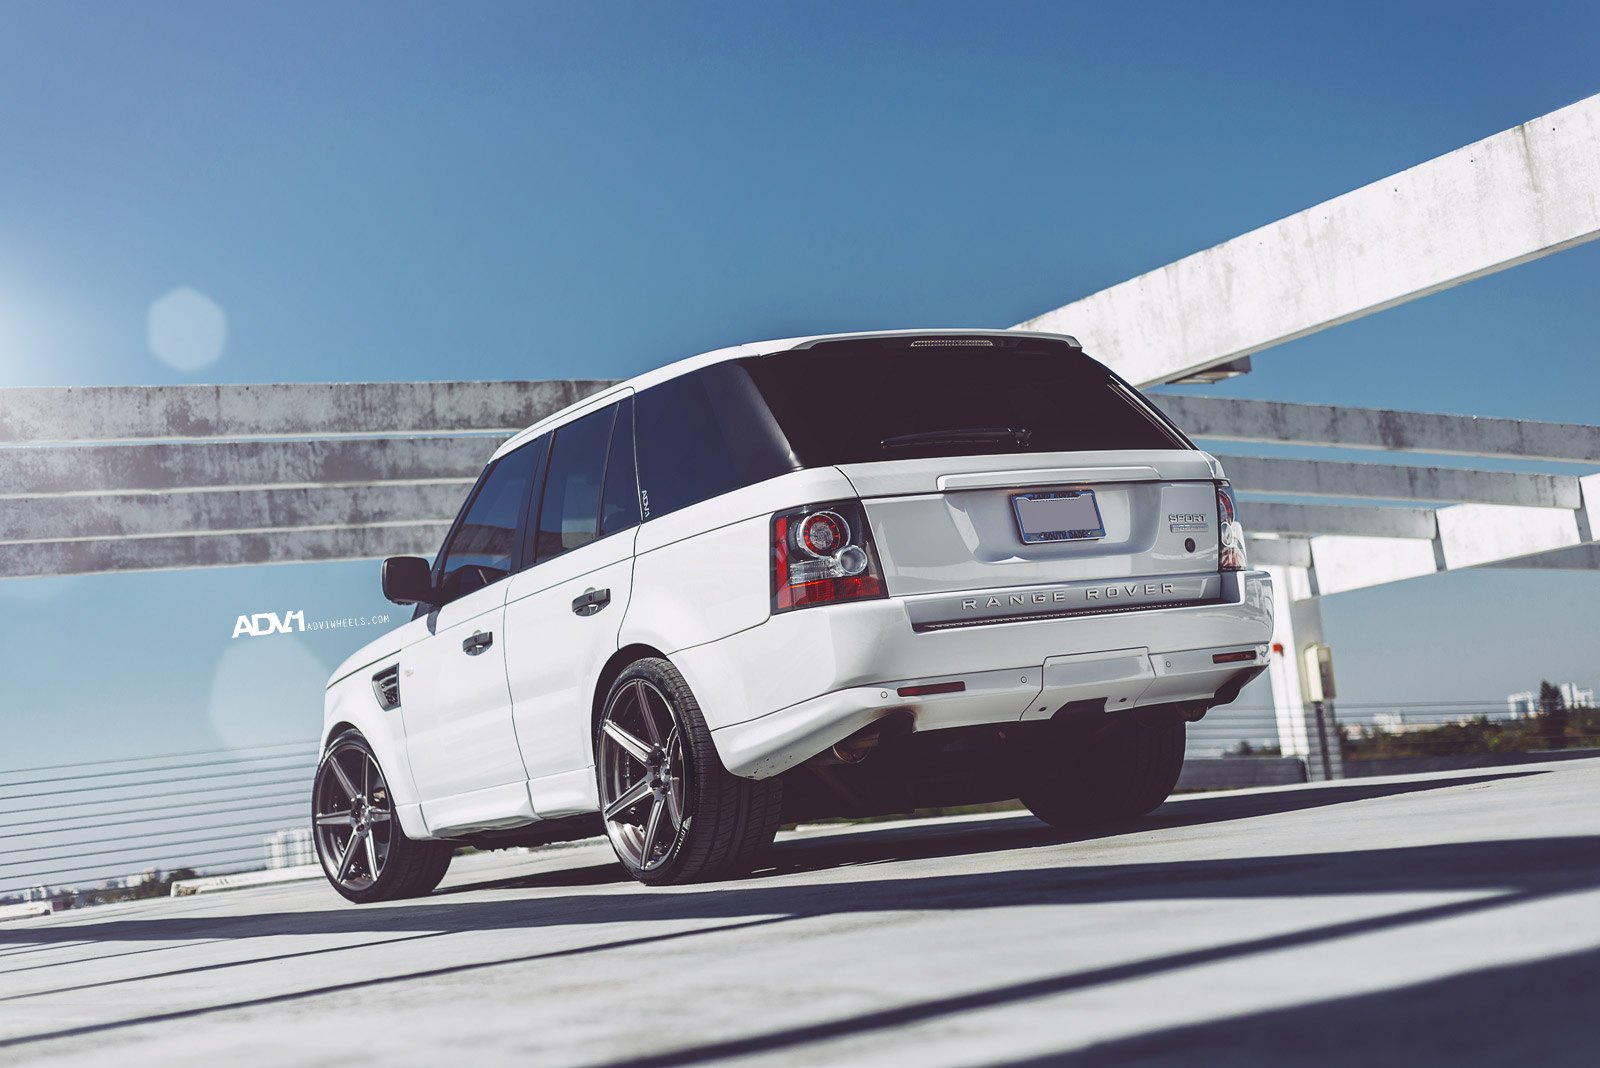 White Range Rover Sport with Gunmetal ADV1 Wheels - Photo by ADV.1